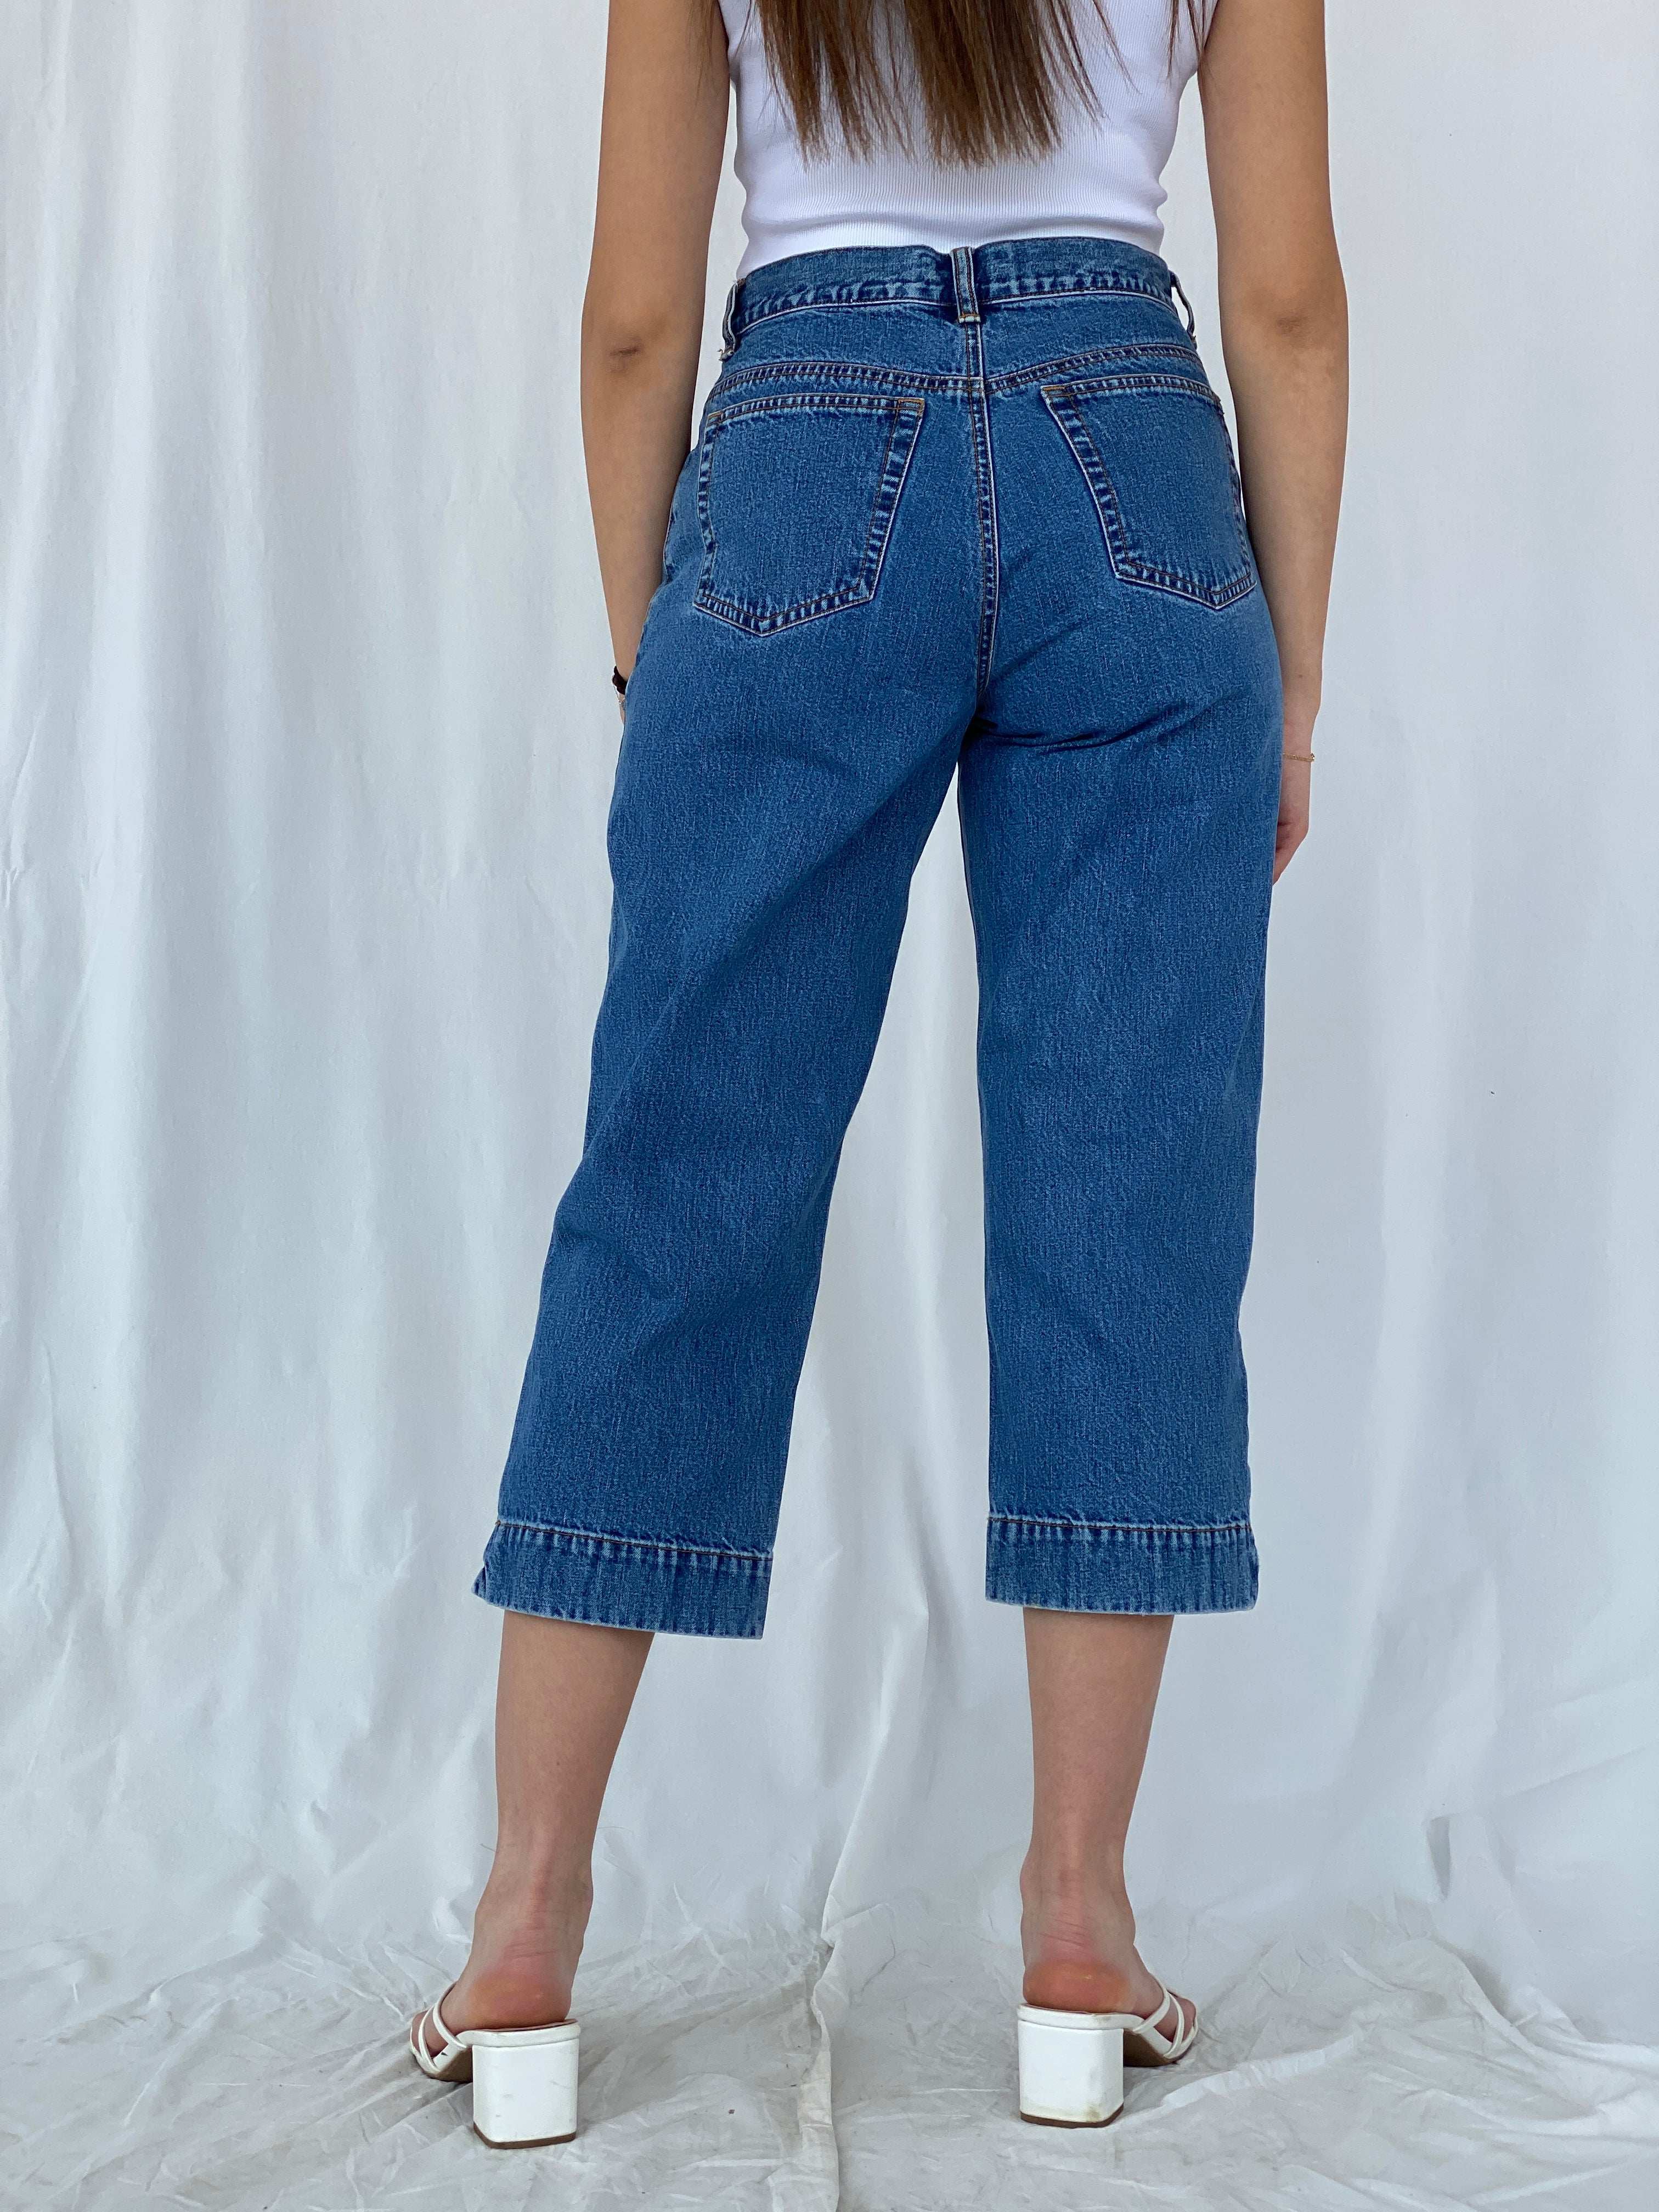 Eddie Bauer Denim Capris Pants - Balagan Vintage Capris Capris, jeans, Juana, NEW IN, women jeans, women top